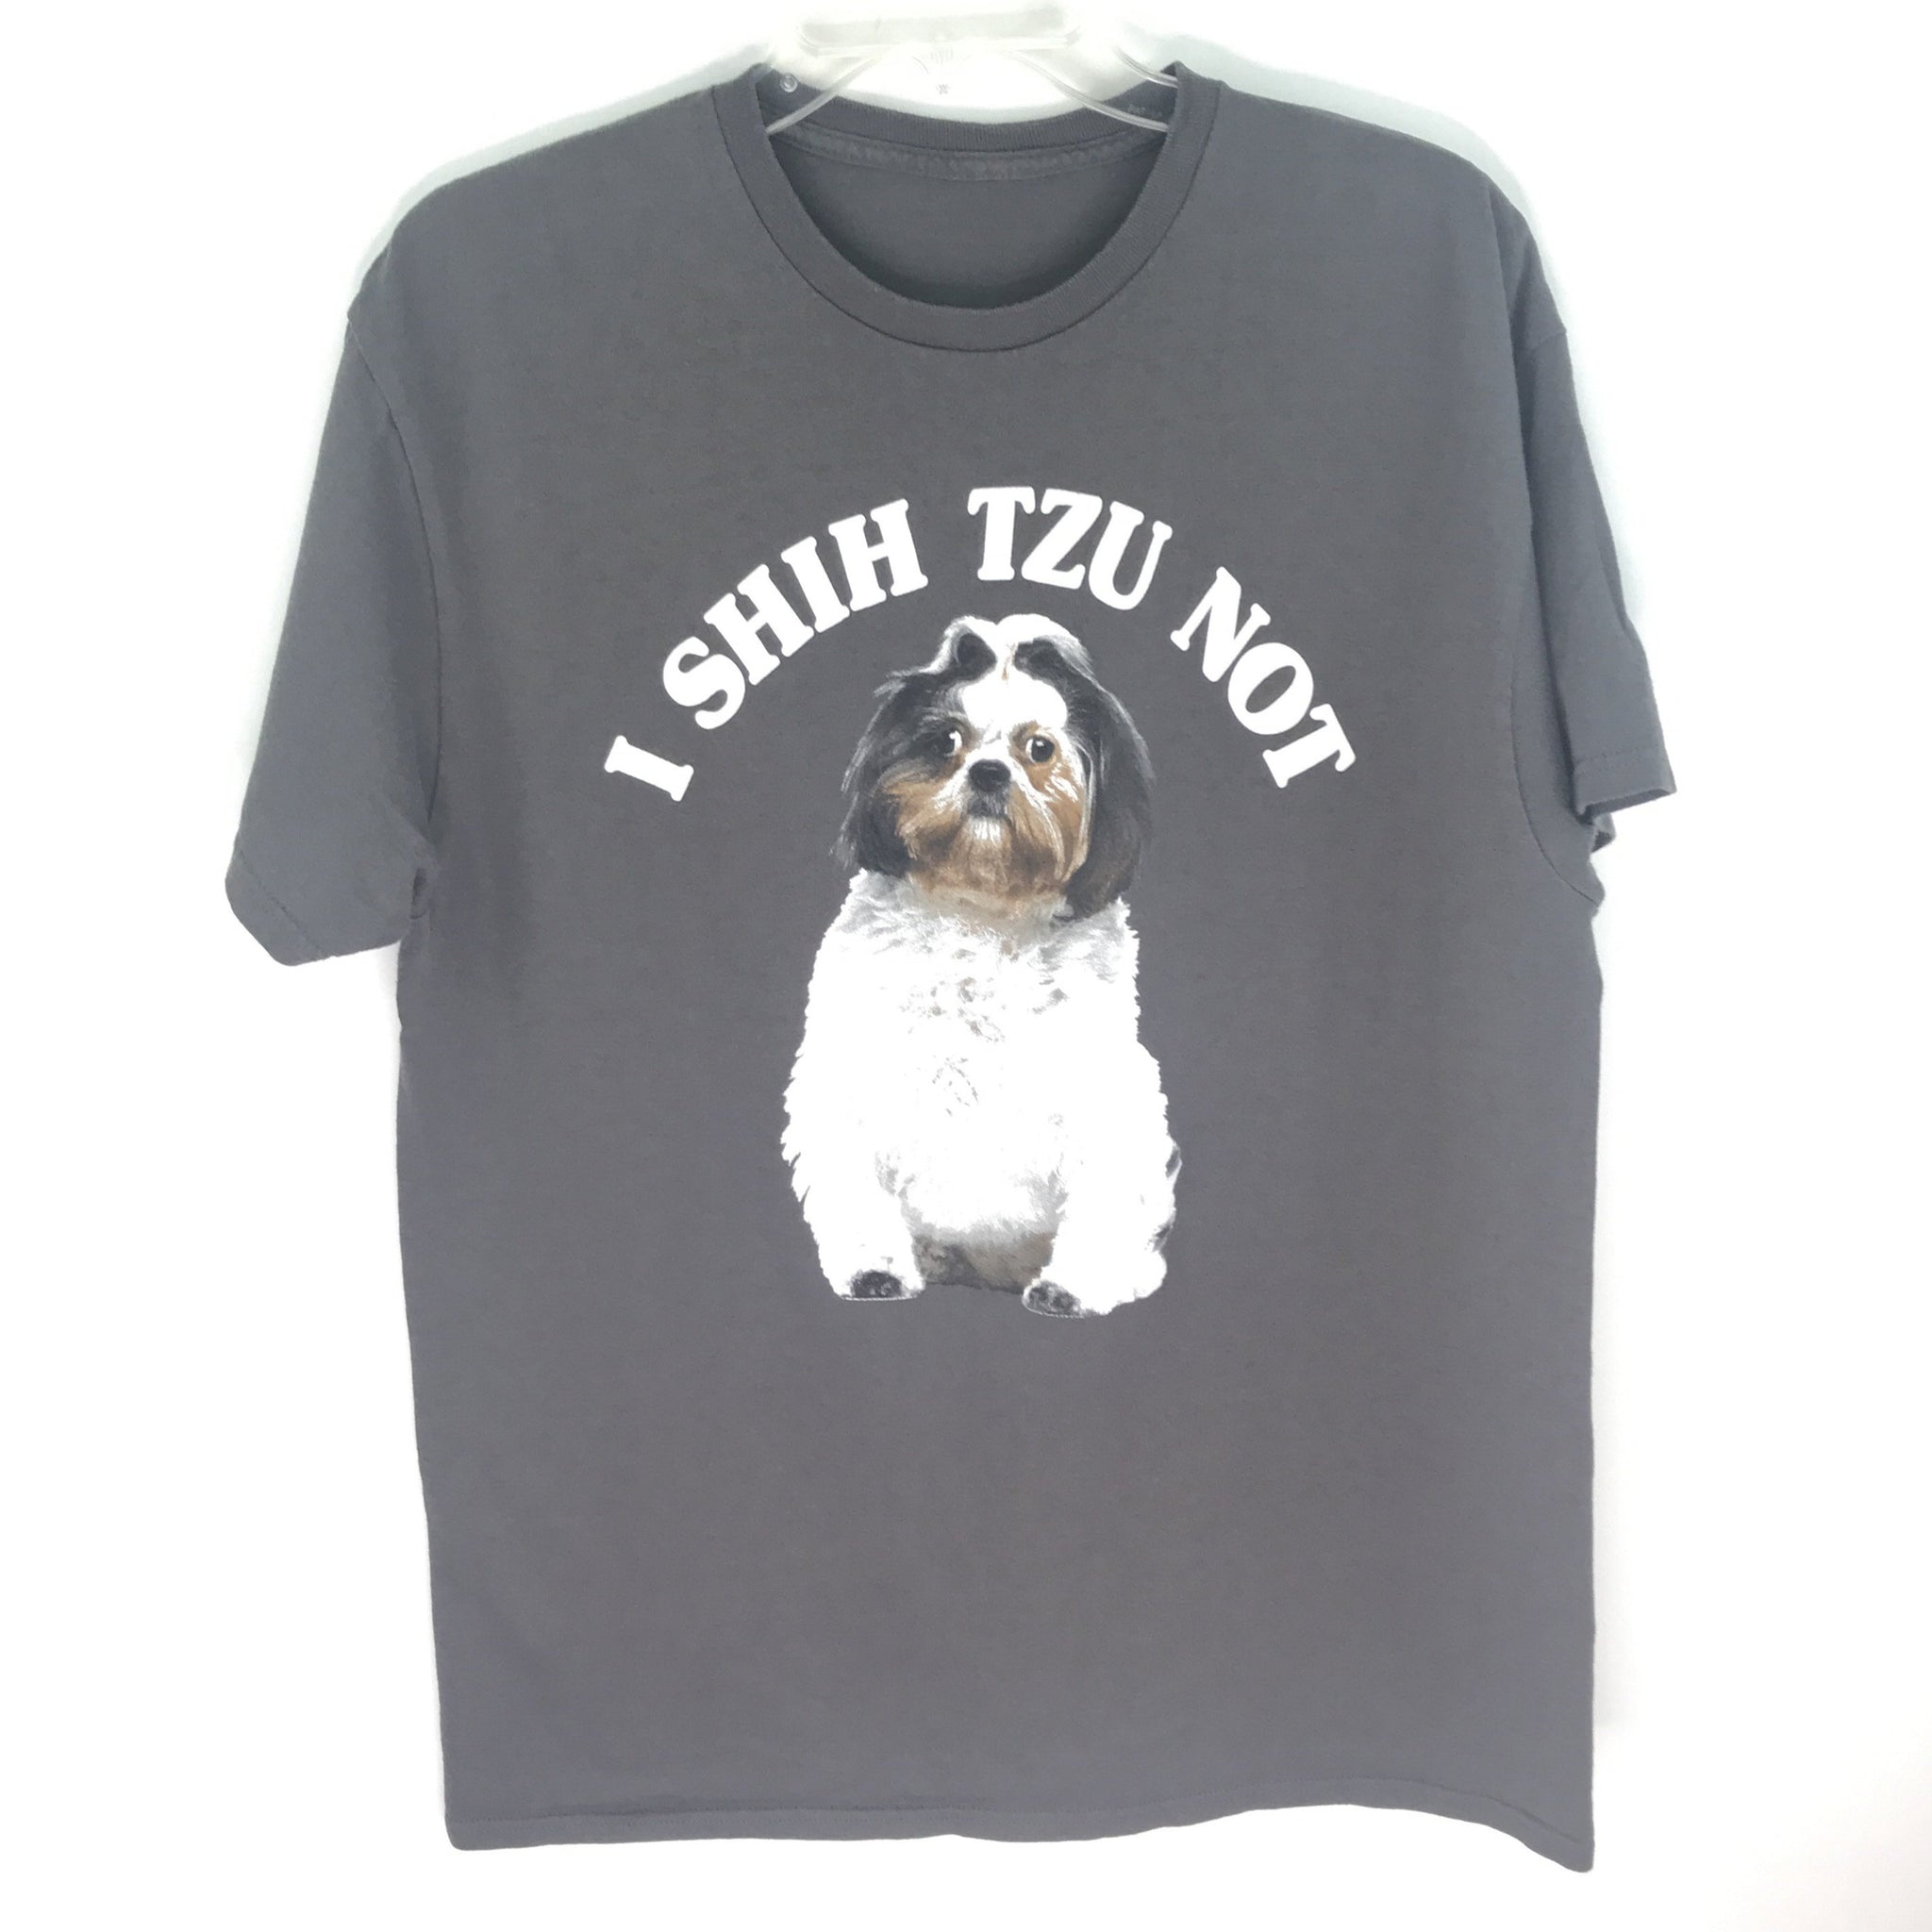 Men’s Graphic Dog T Shirt - Gray-  Size Large Crew Neck - Shih Tzu Dog - No Tags